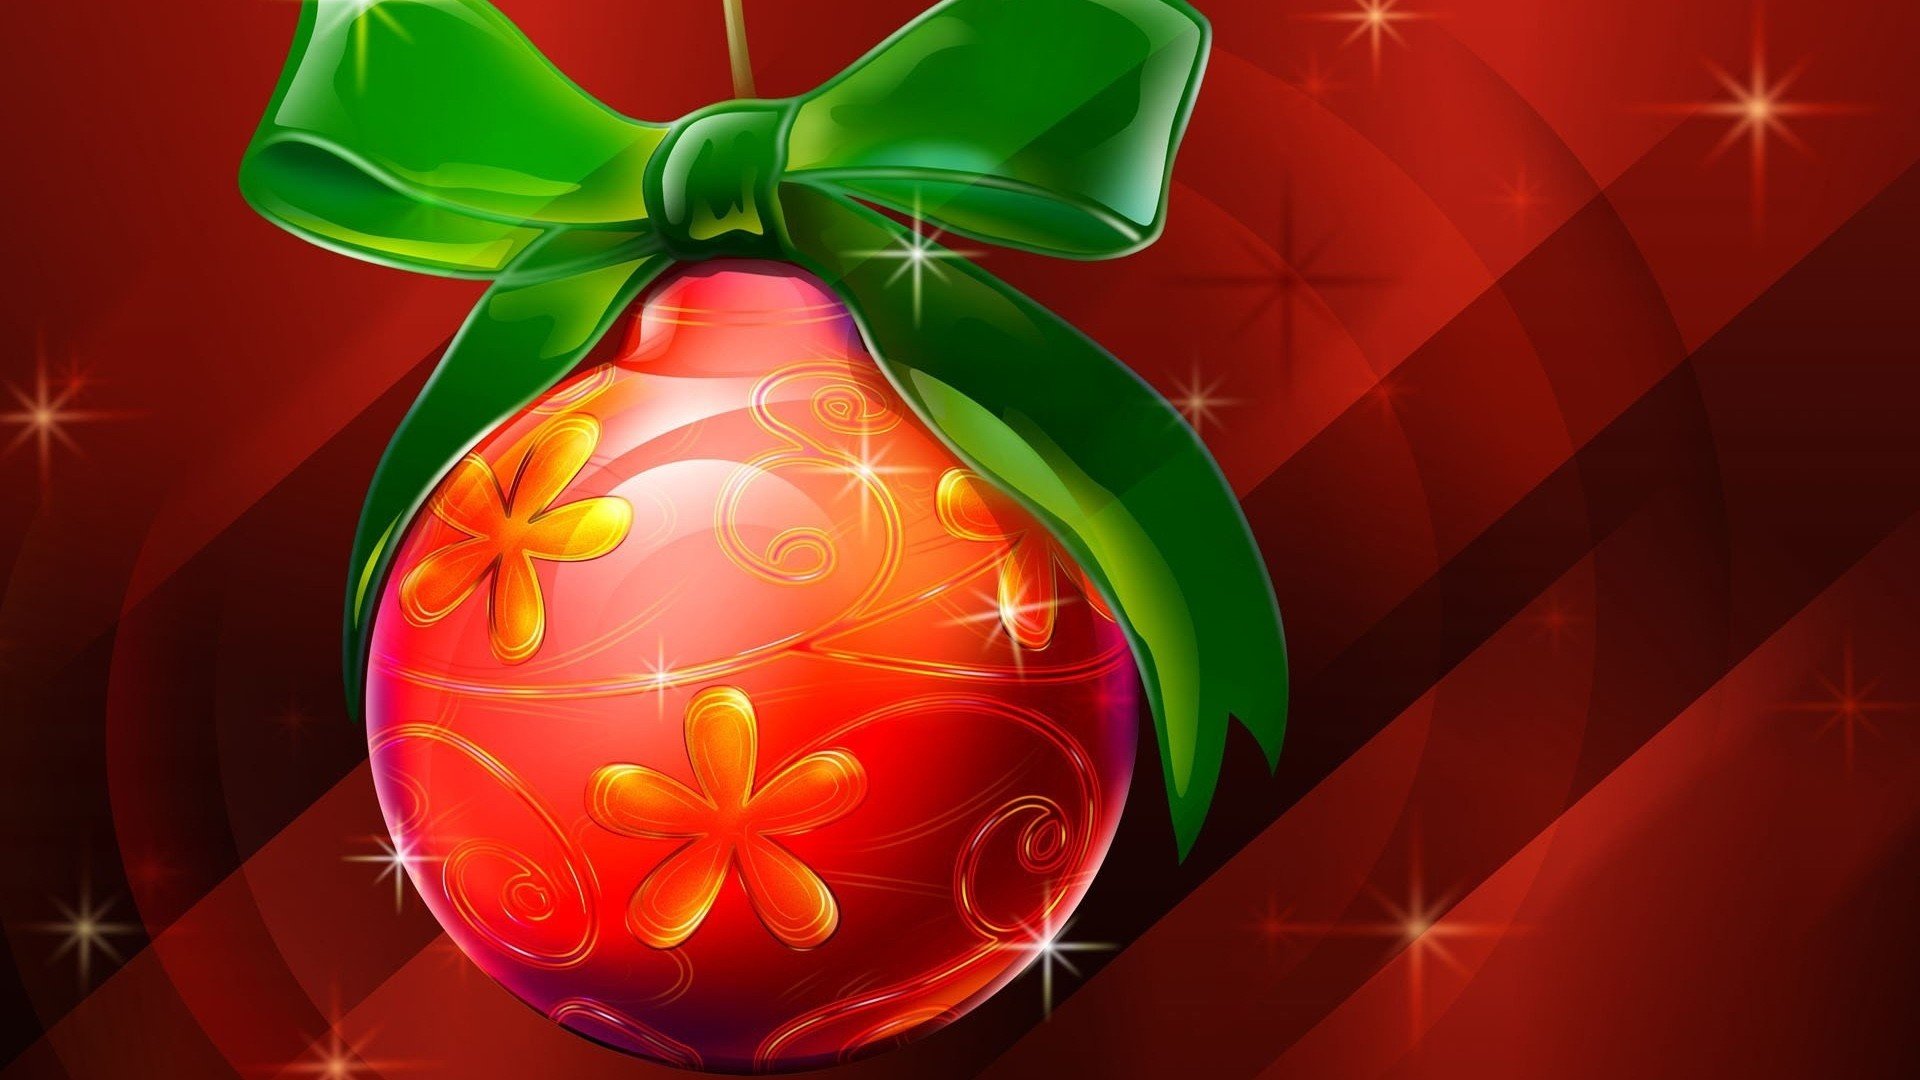 Best Christmas Ornaments/Decorations wallpaper ID:434439 for High Resolution hd 1920x1080 desktop